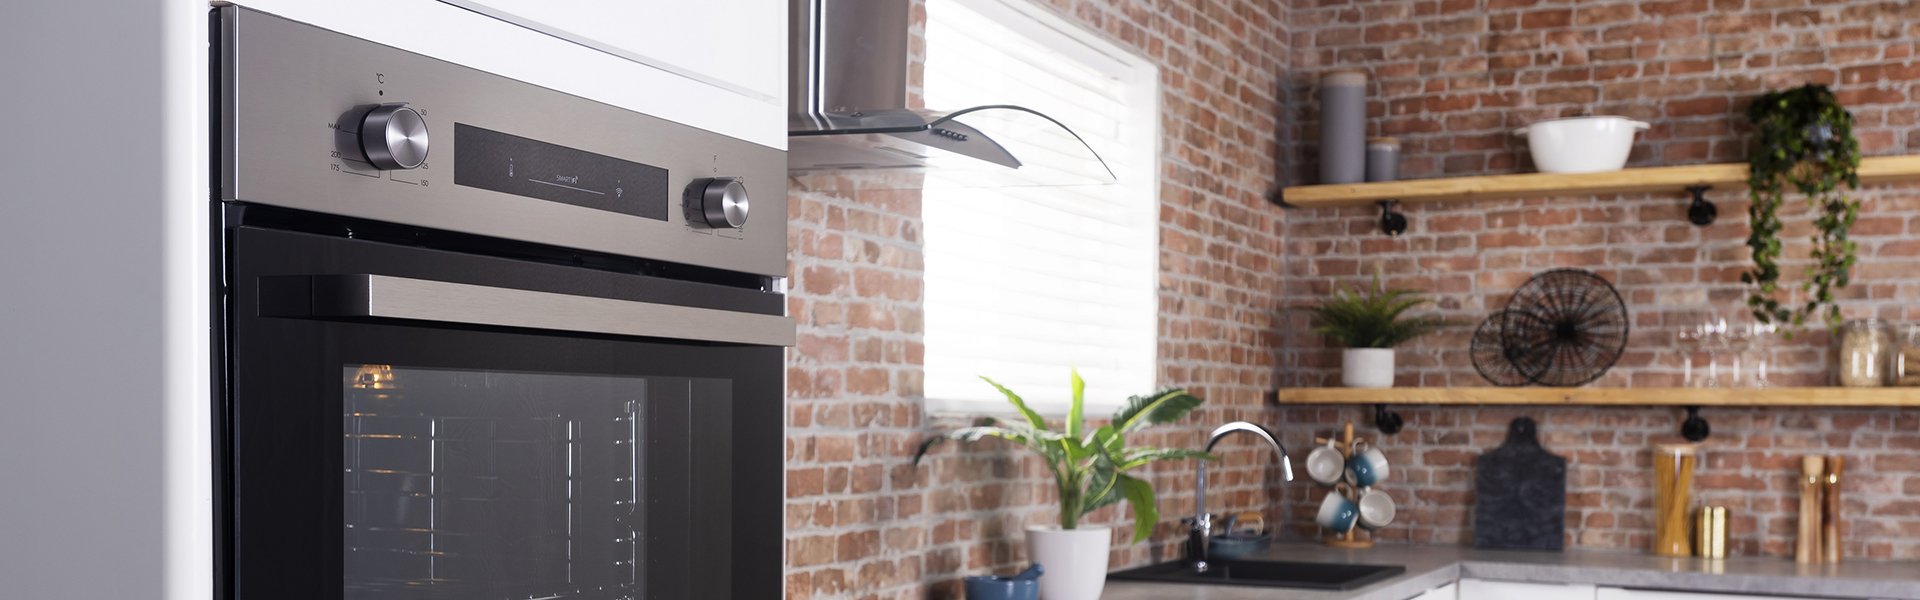 E Black Built-in Electric Single Oven in brickwork kitchen